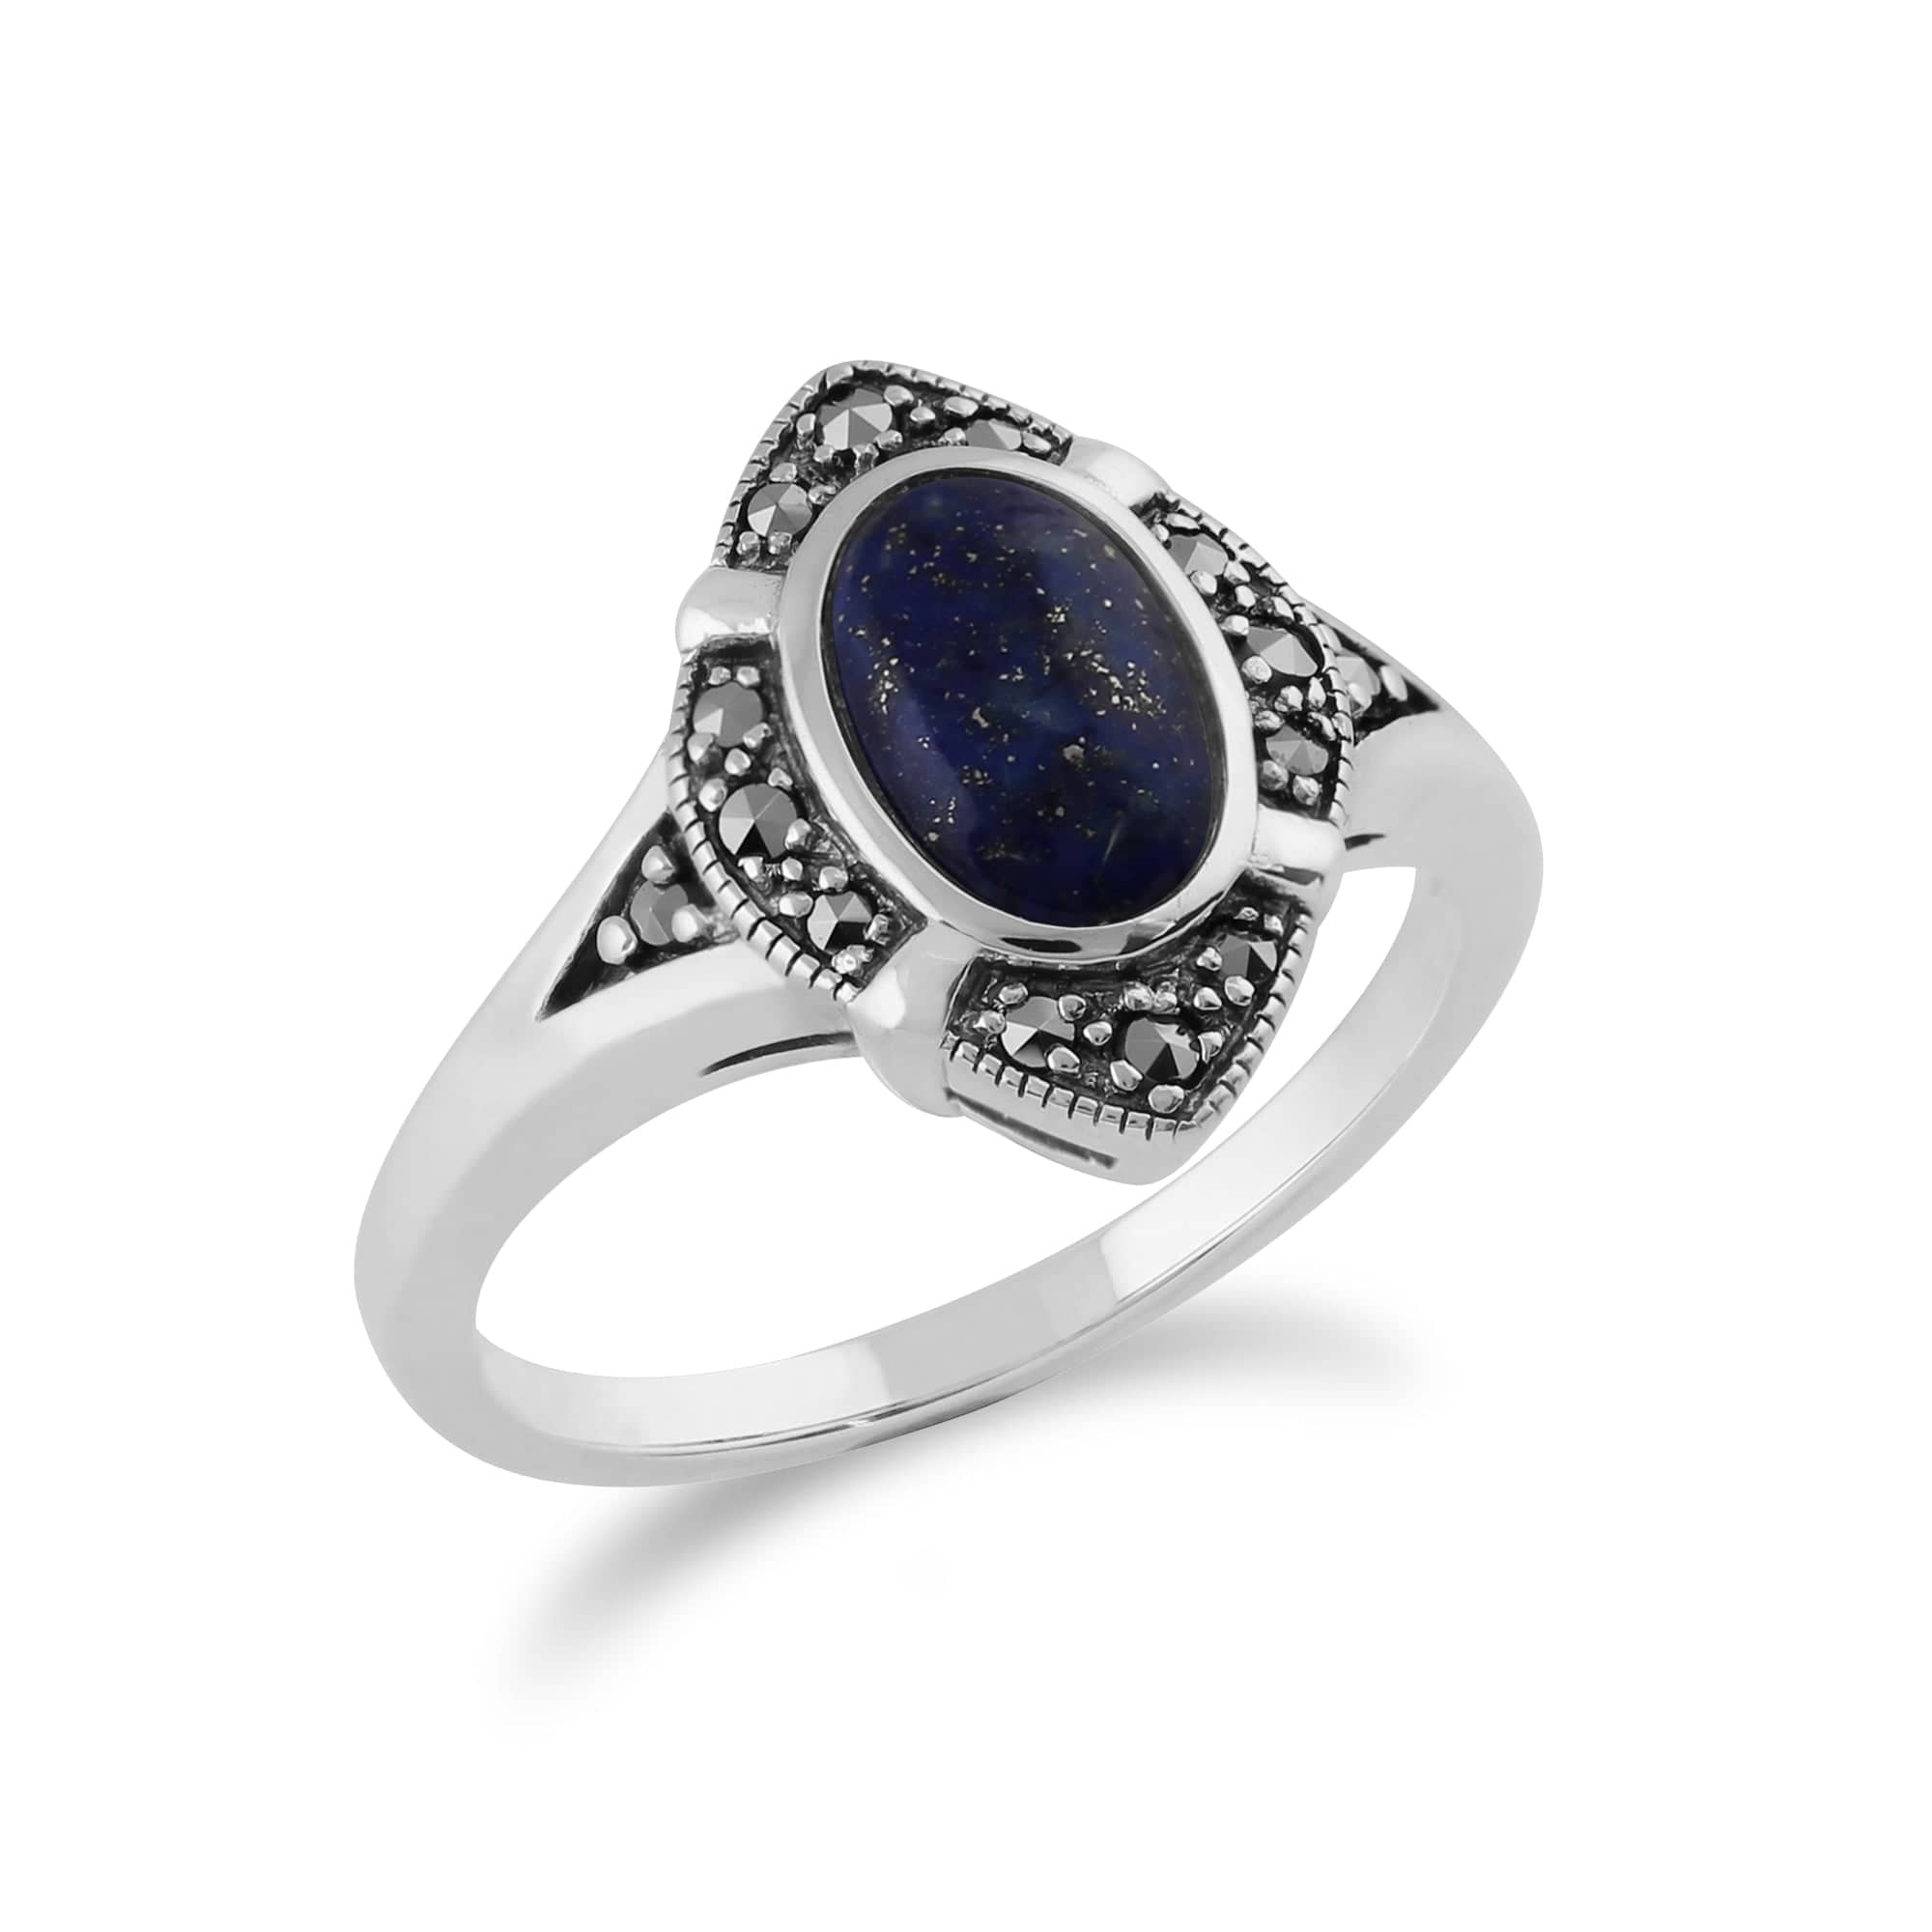 Gemondo 925 Sterling Silver 1.00ct Lapis Lazuli & Marcasite Art Deco Ring Image 2